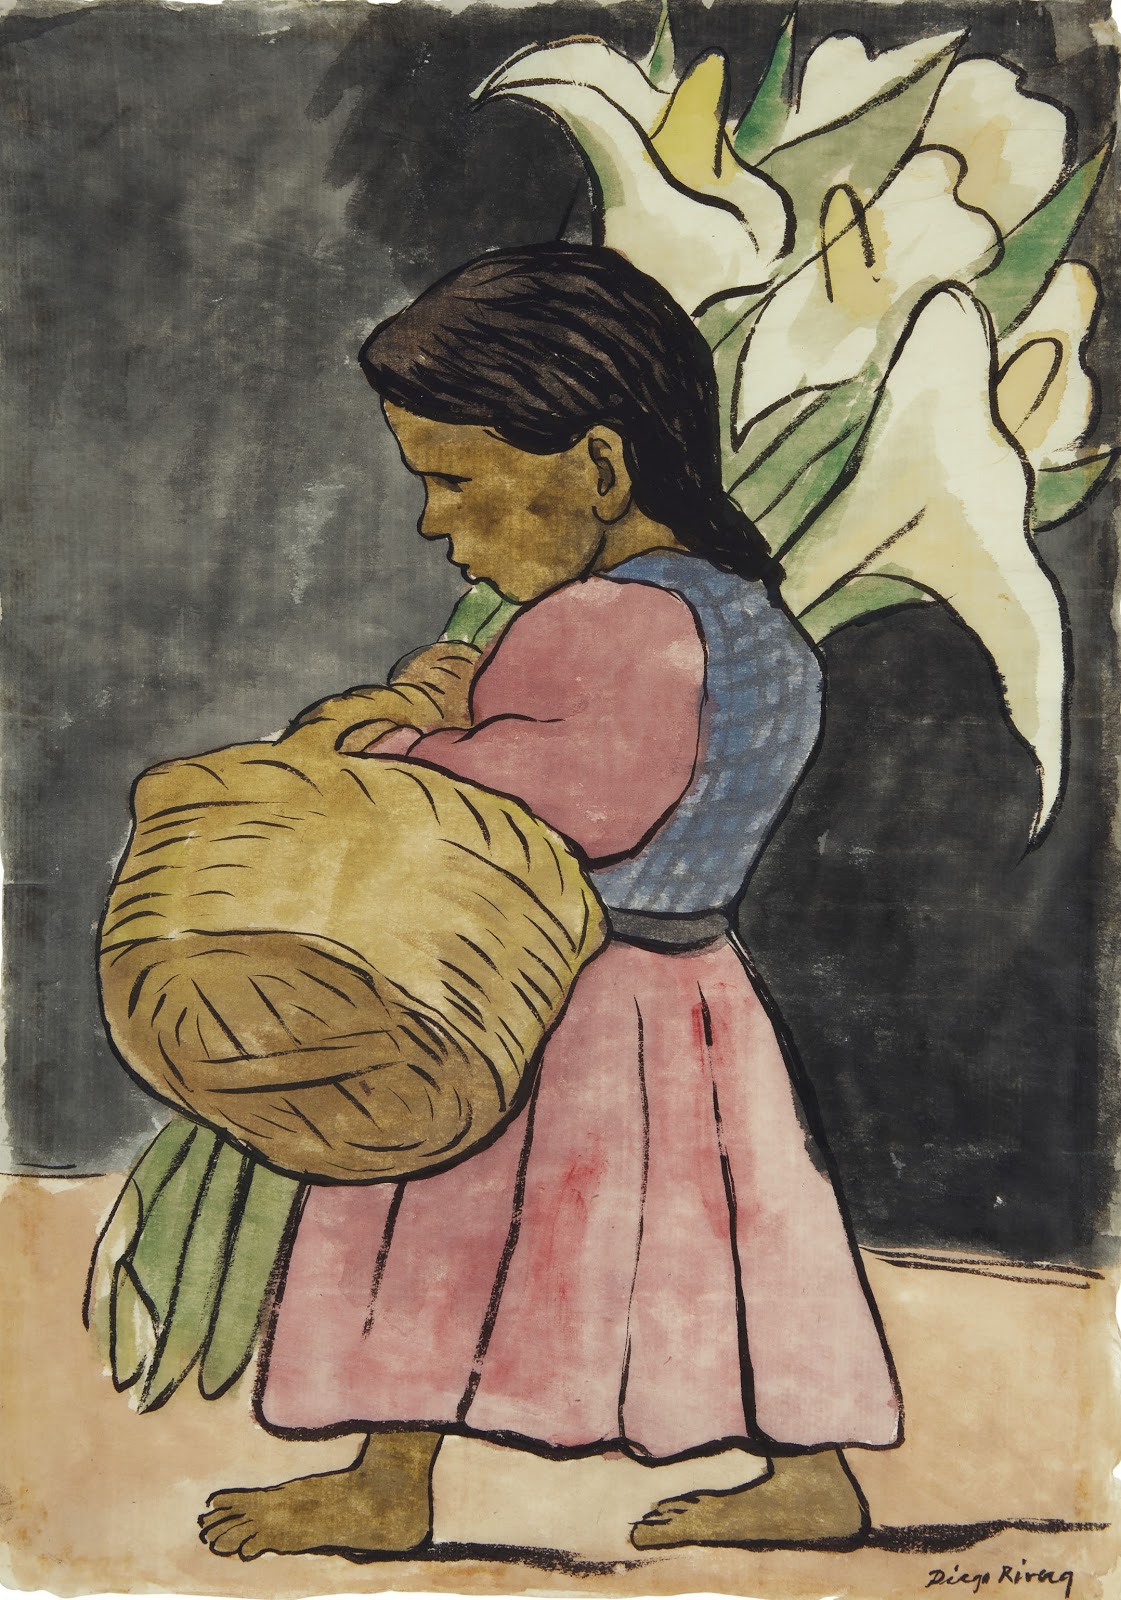 Diego+Rivera-1886-1957 (18).jpg